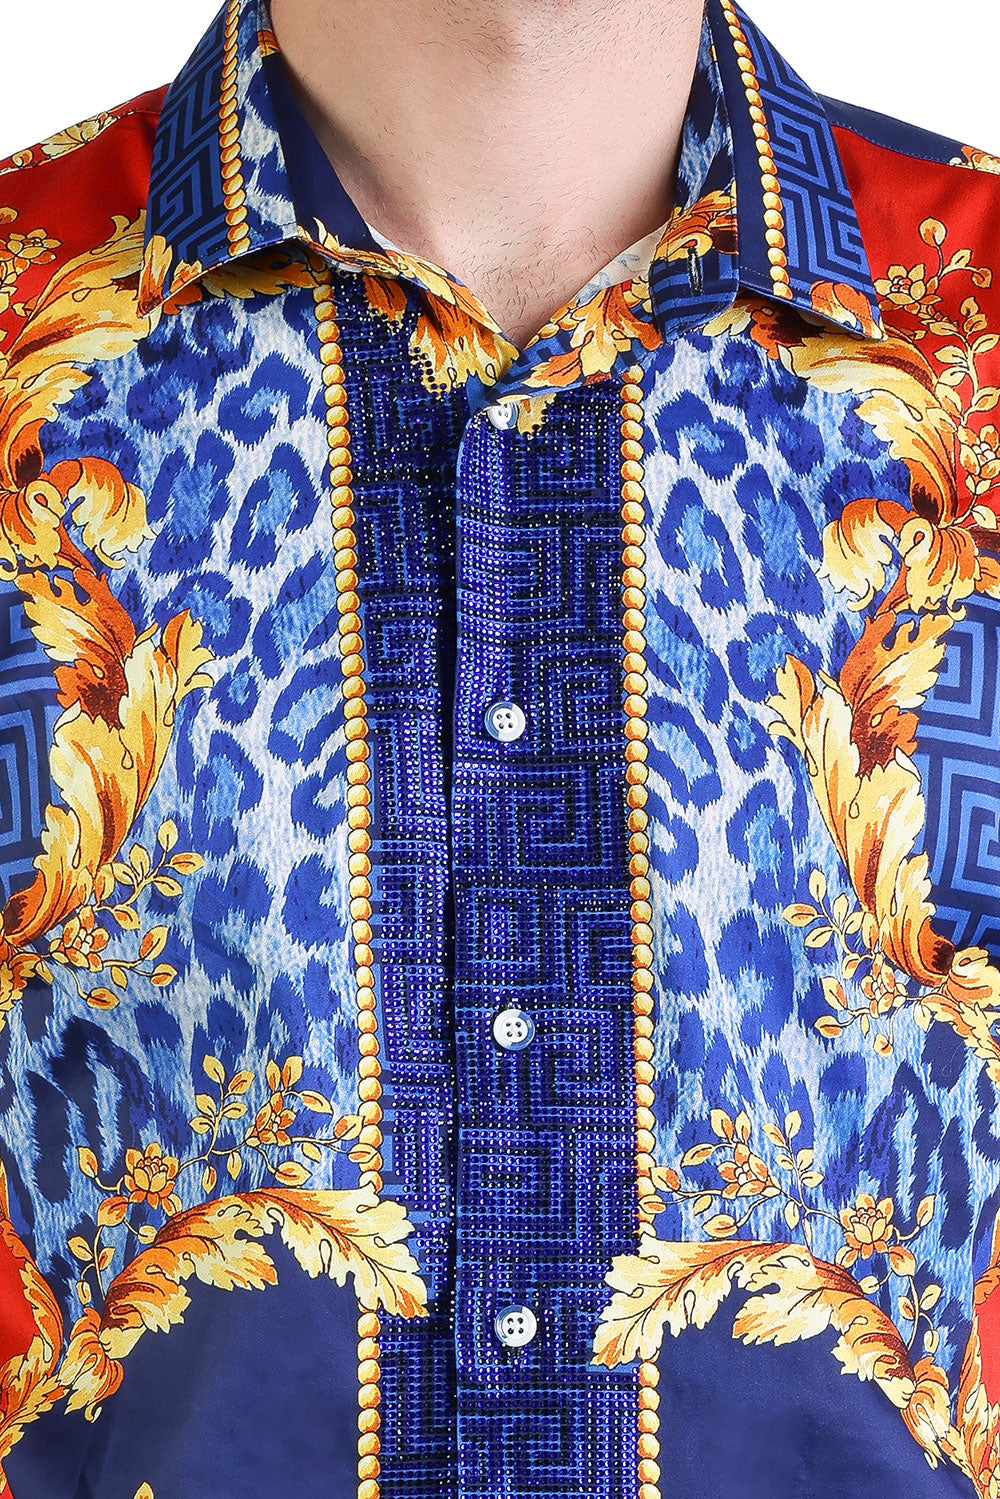 BARABAS Men's Rhinestone Medusa Floral Greek Key Baroque Shirt SPR01  Blue Red